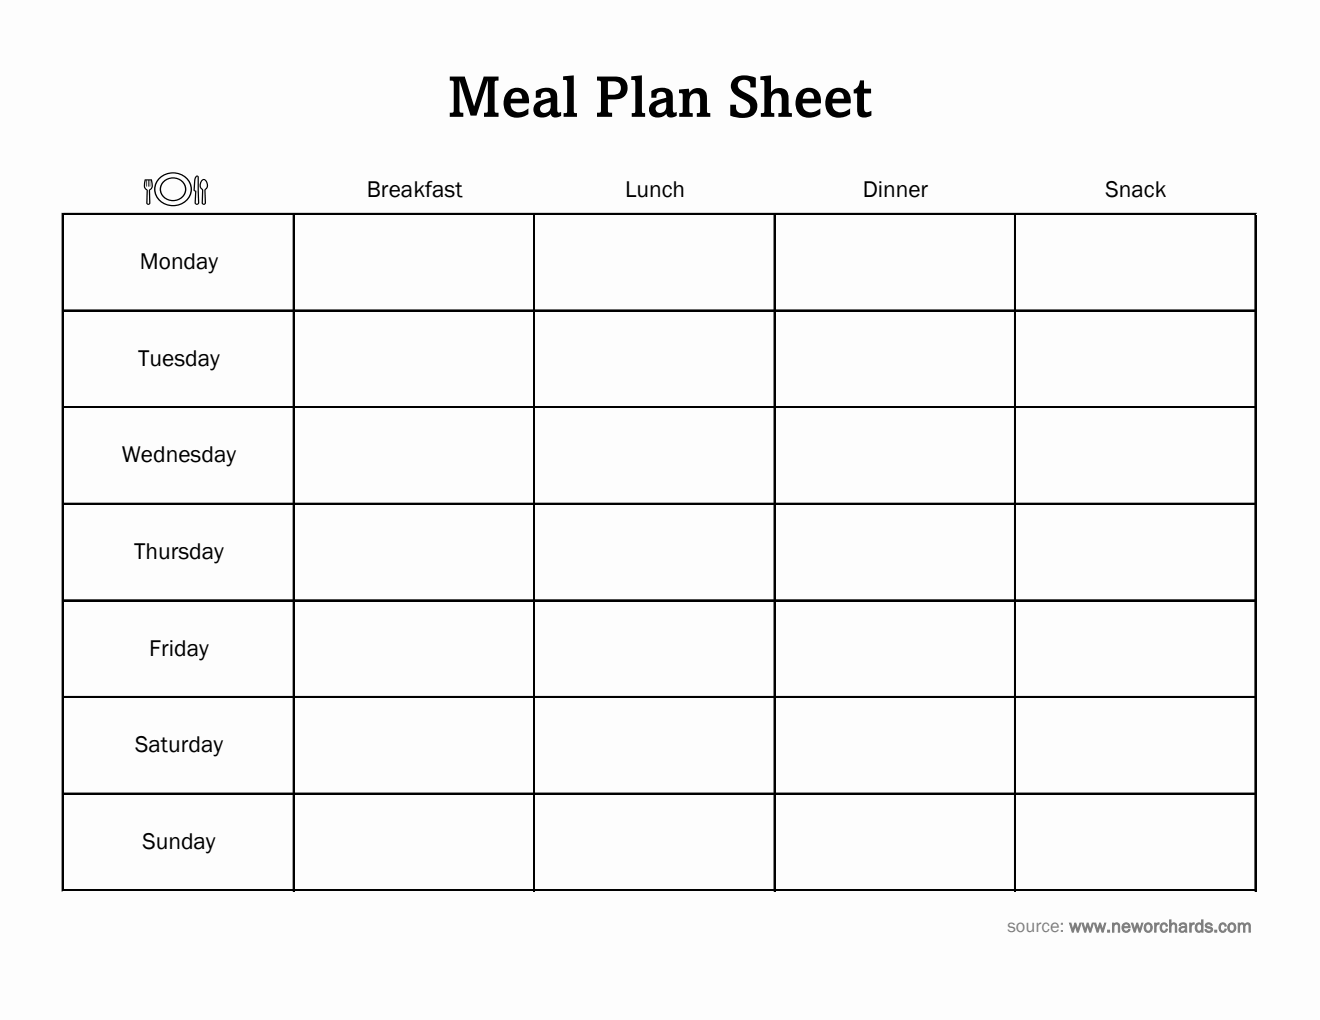 Free Printable Meal Plan Sheet in Excel Format